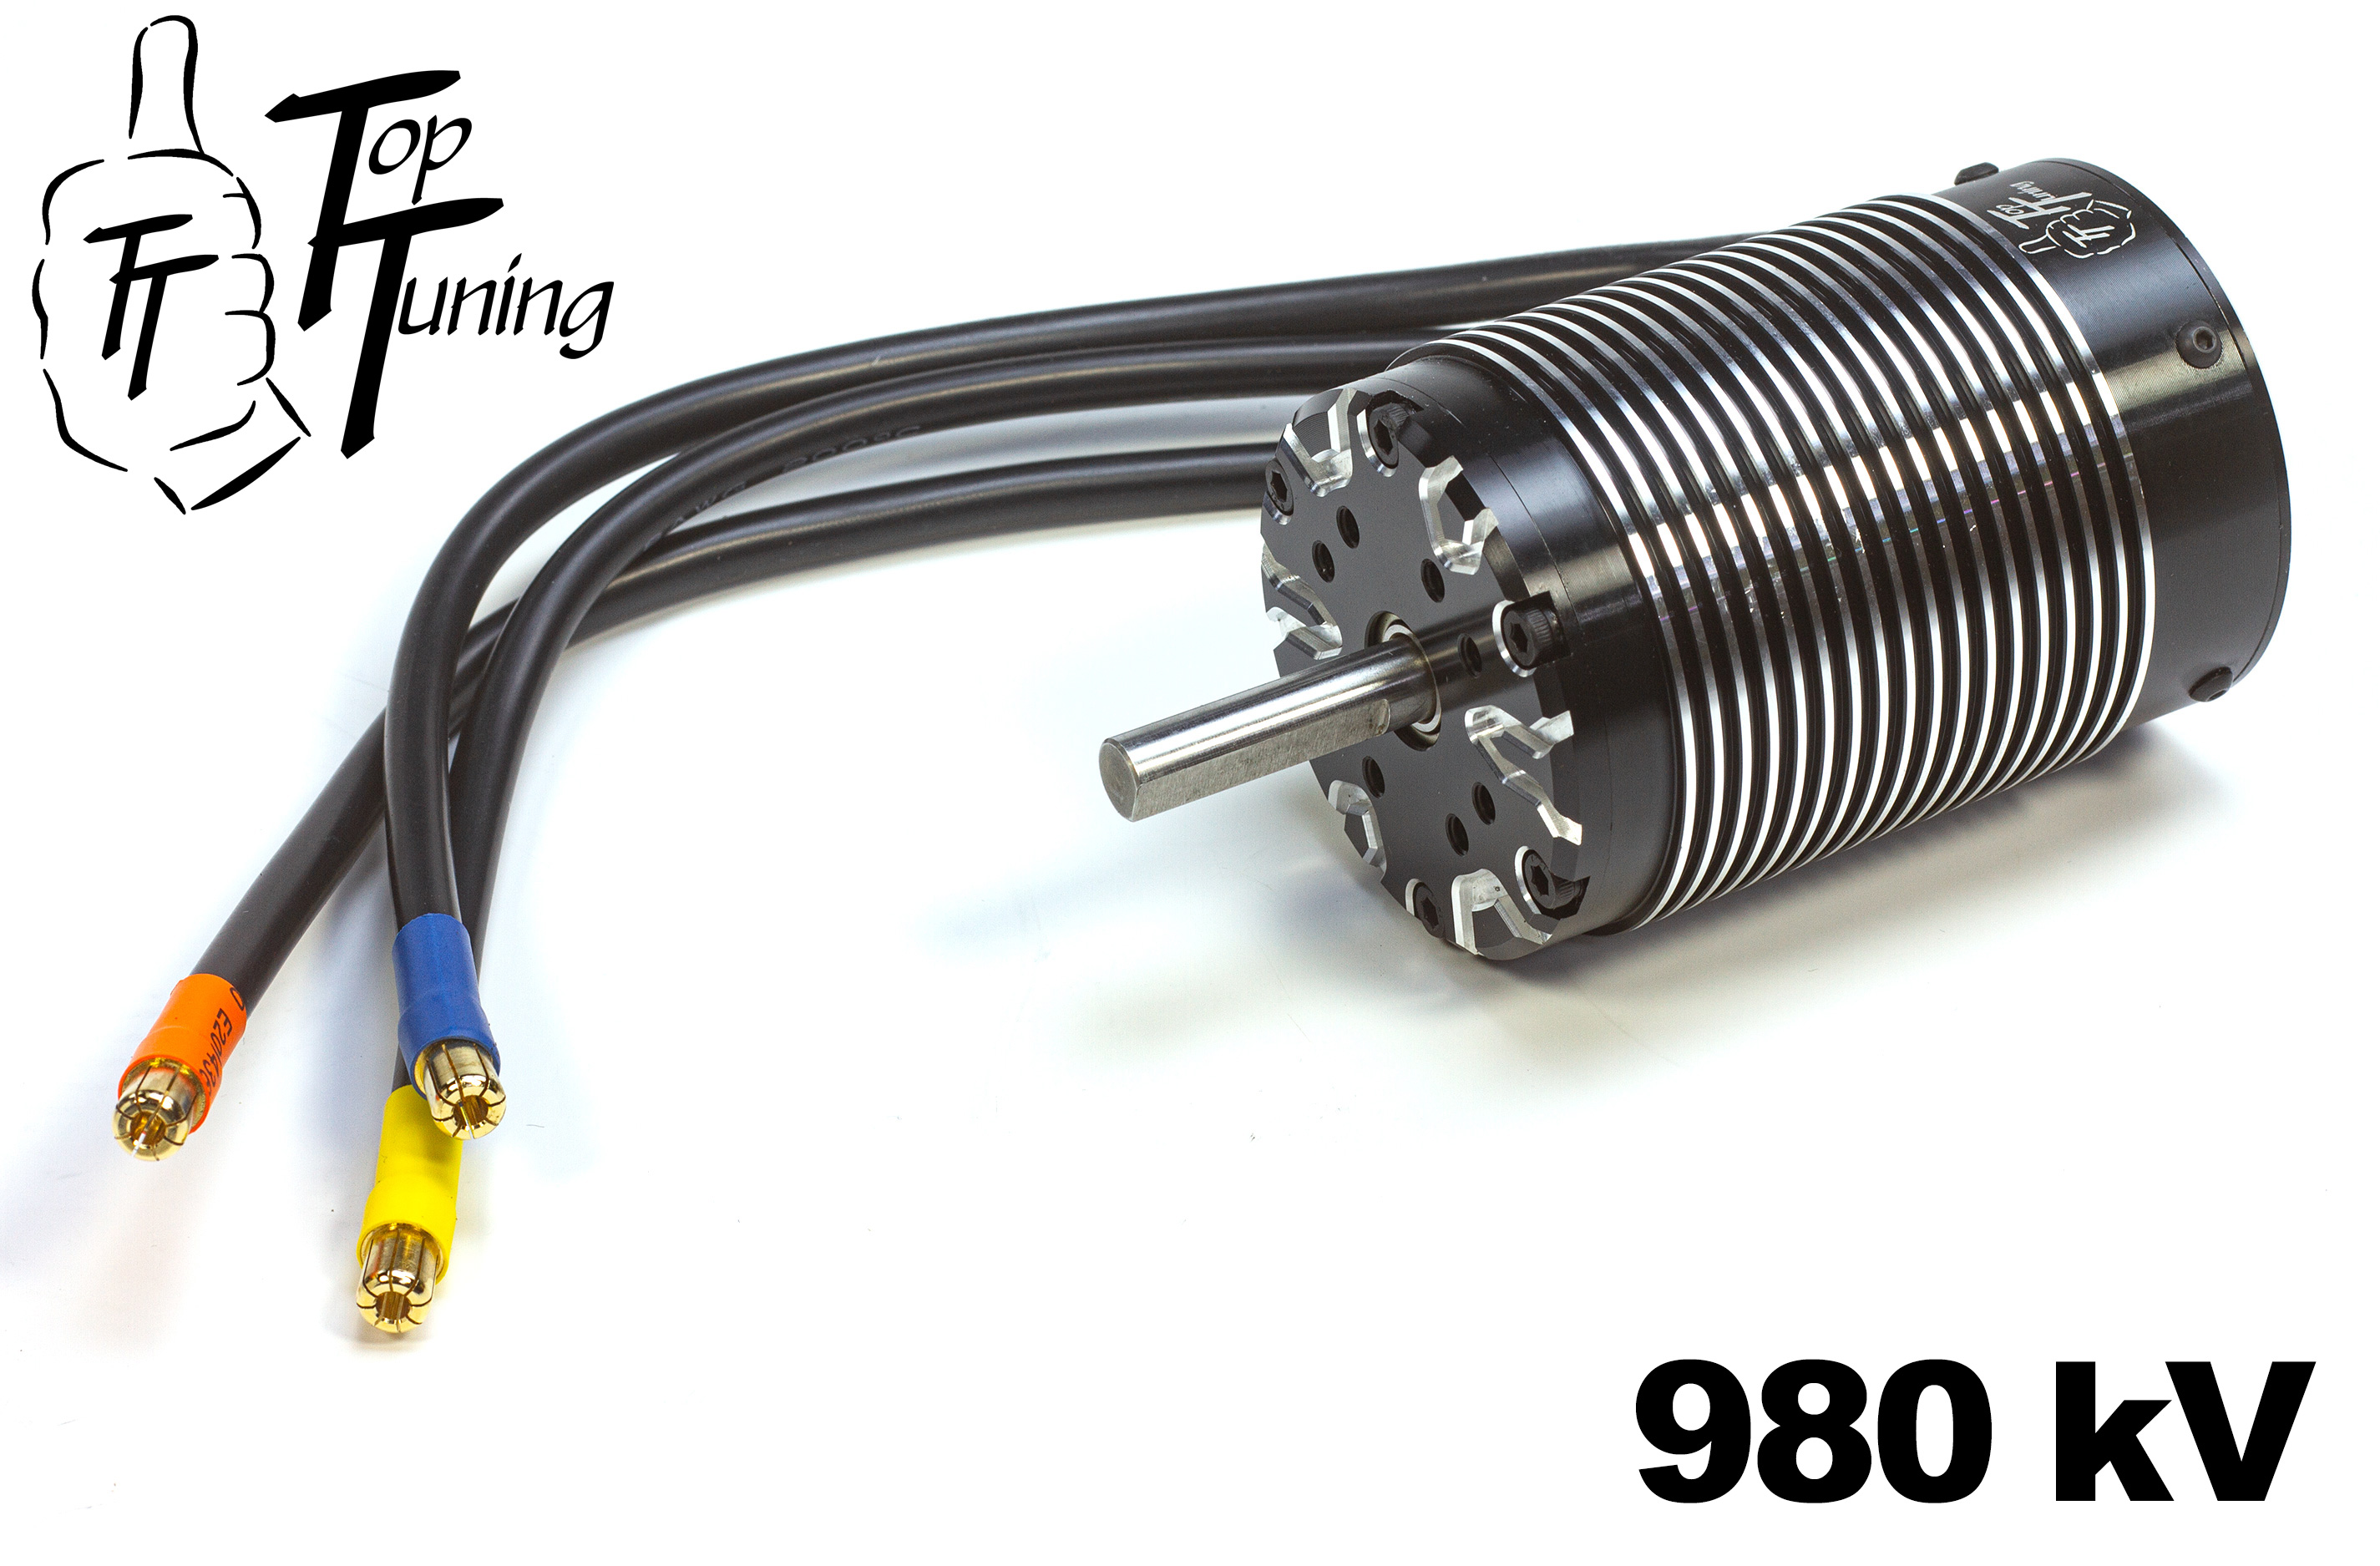 TT5682/01 Top Tuning Brushless Motor 980 kV